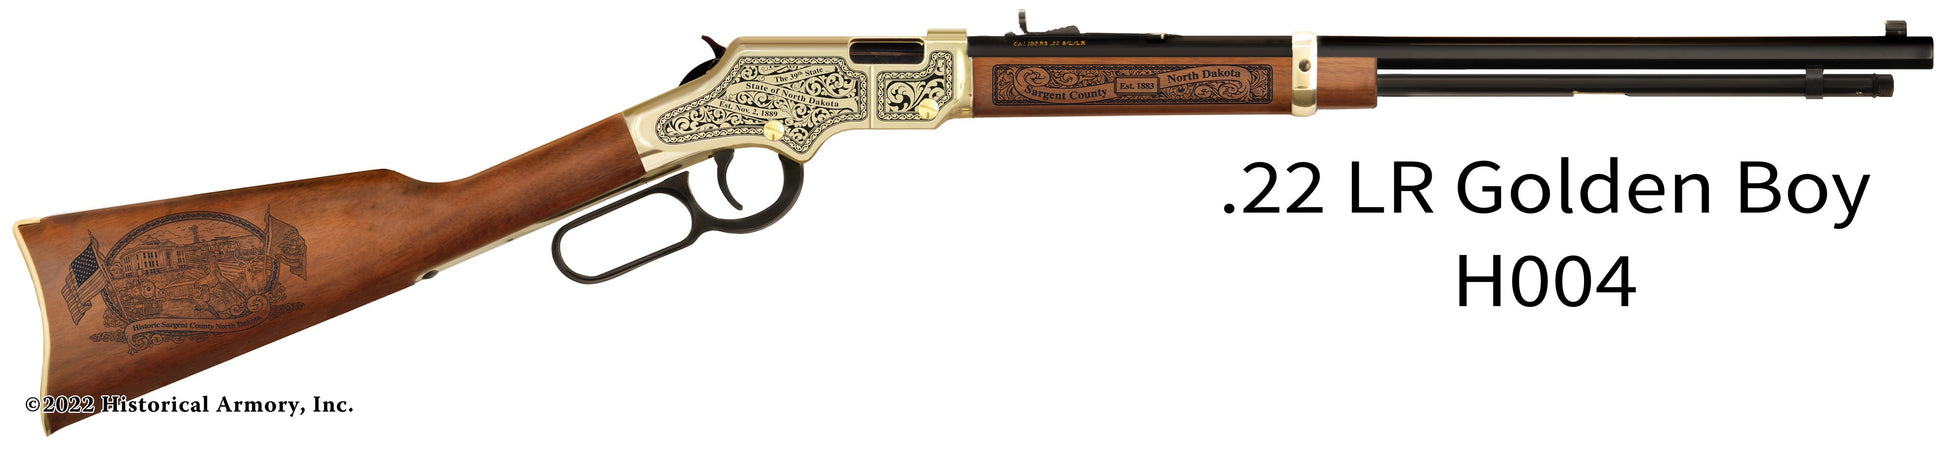 Sargent County North Dakota Engraved Henry Golden Boy Rifle